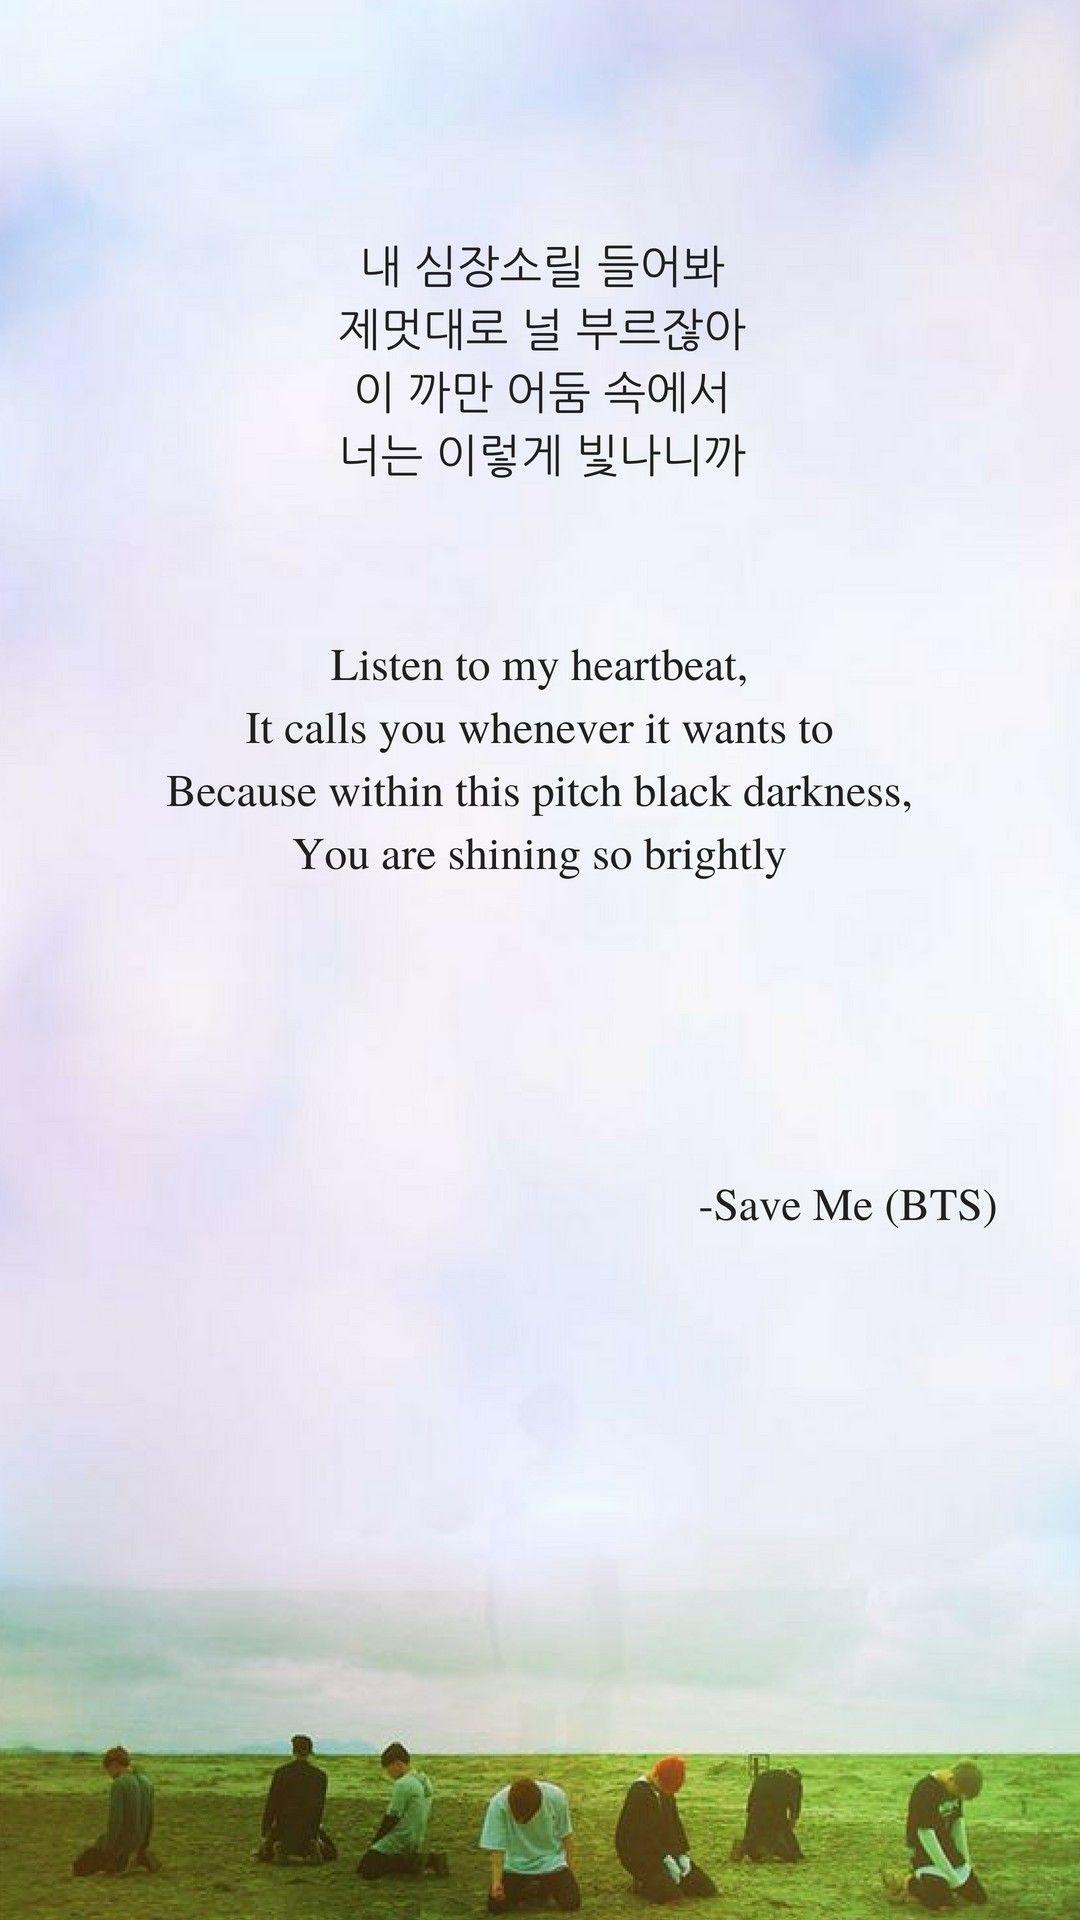 Save Me by BTS lyrics wallpaper. BTS Lyrics & Quotes. Bts lyric